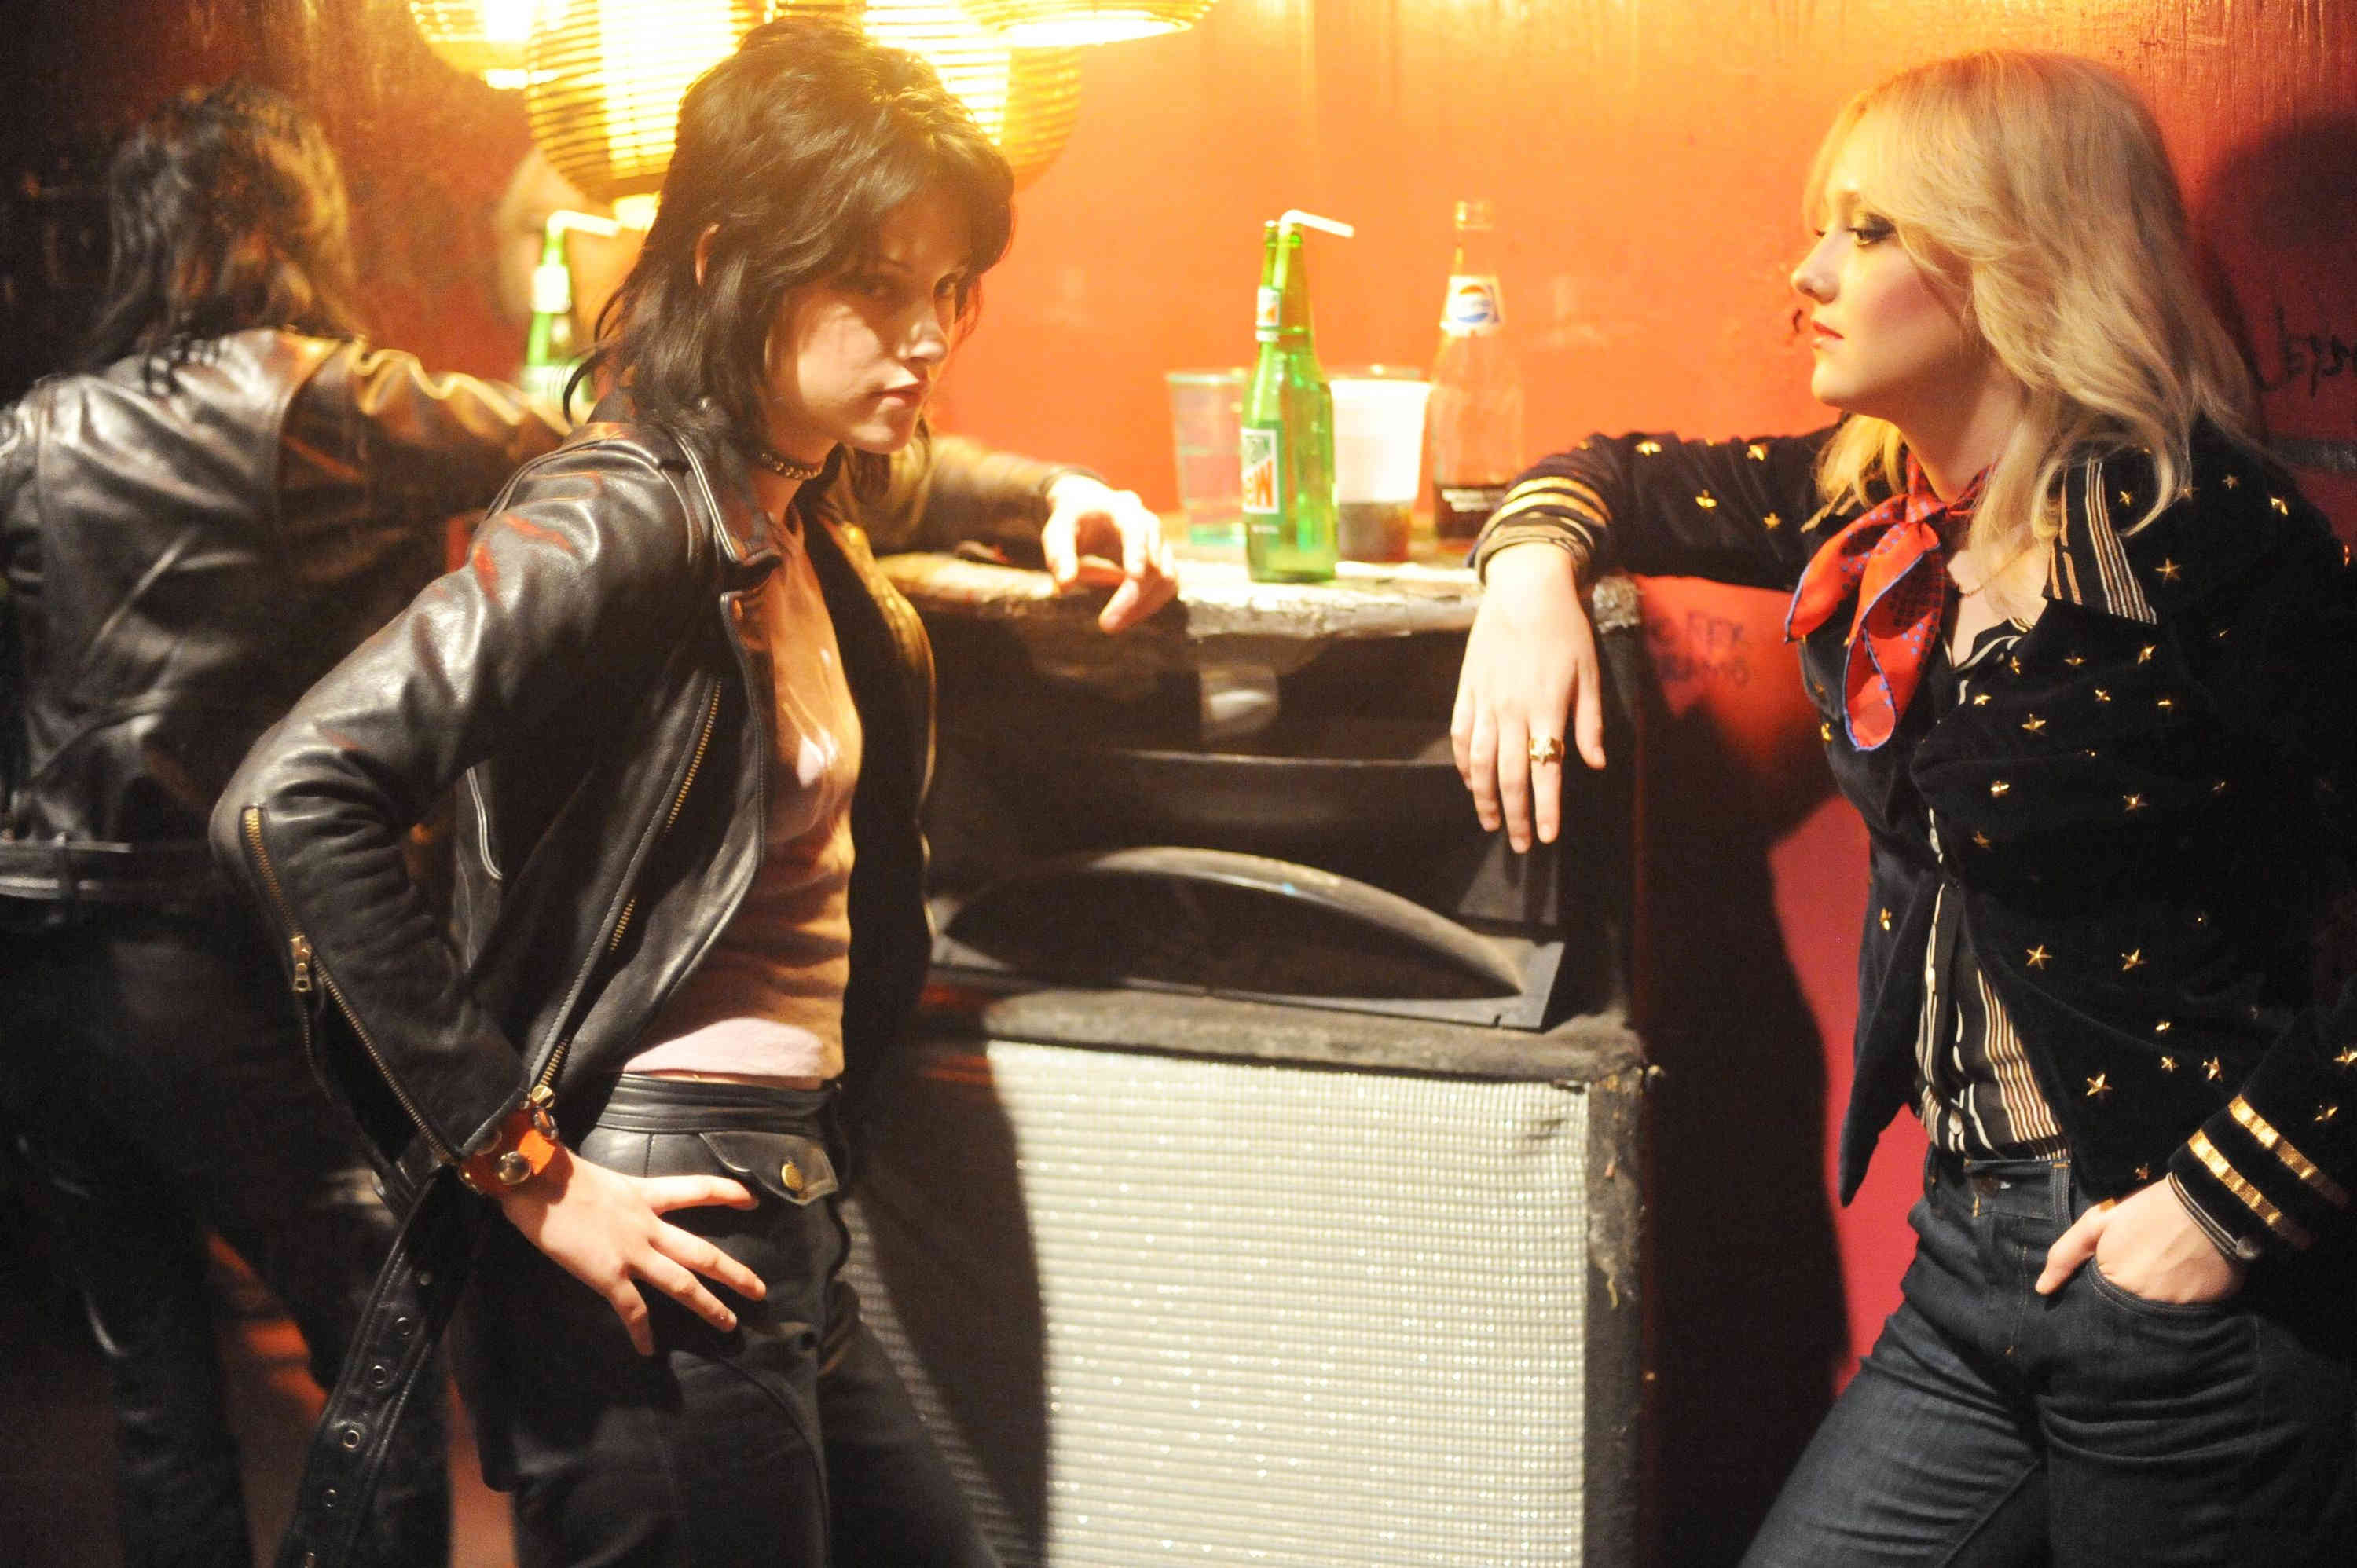 Kristen Stewart stars as Joan Jett and Dakota Fanning stars as Cherie Currie in Apparition's The Runaways (2010)